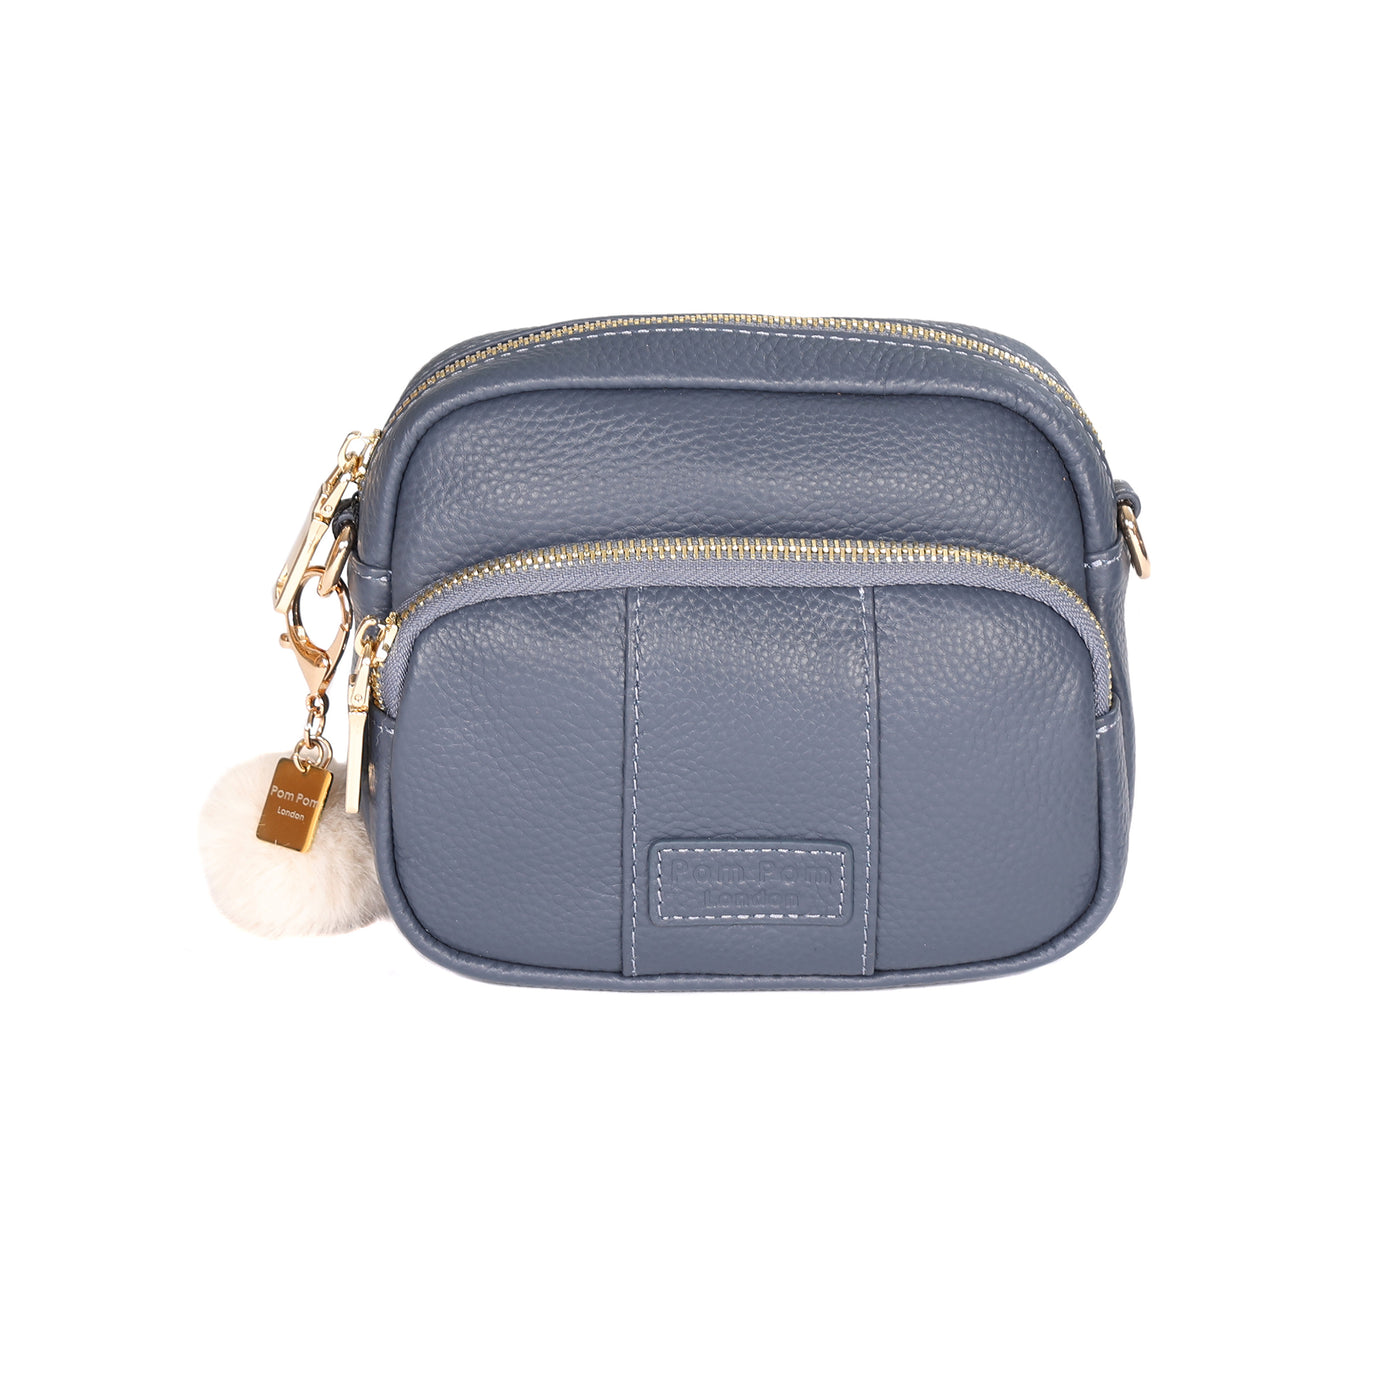 Mayfair MINI Bag Slate Blue & Accessories